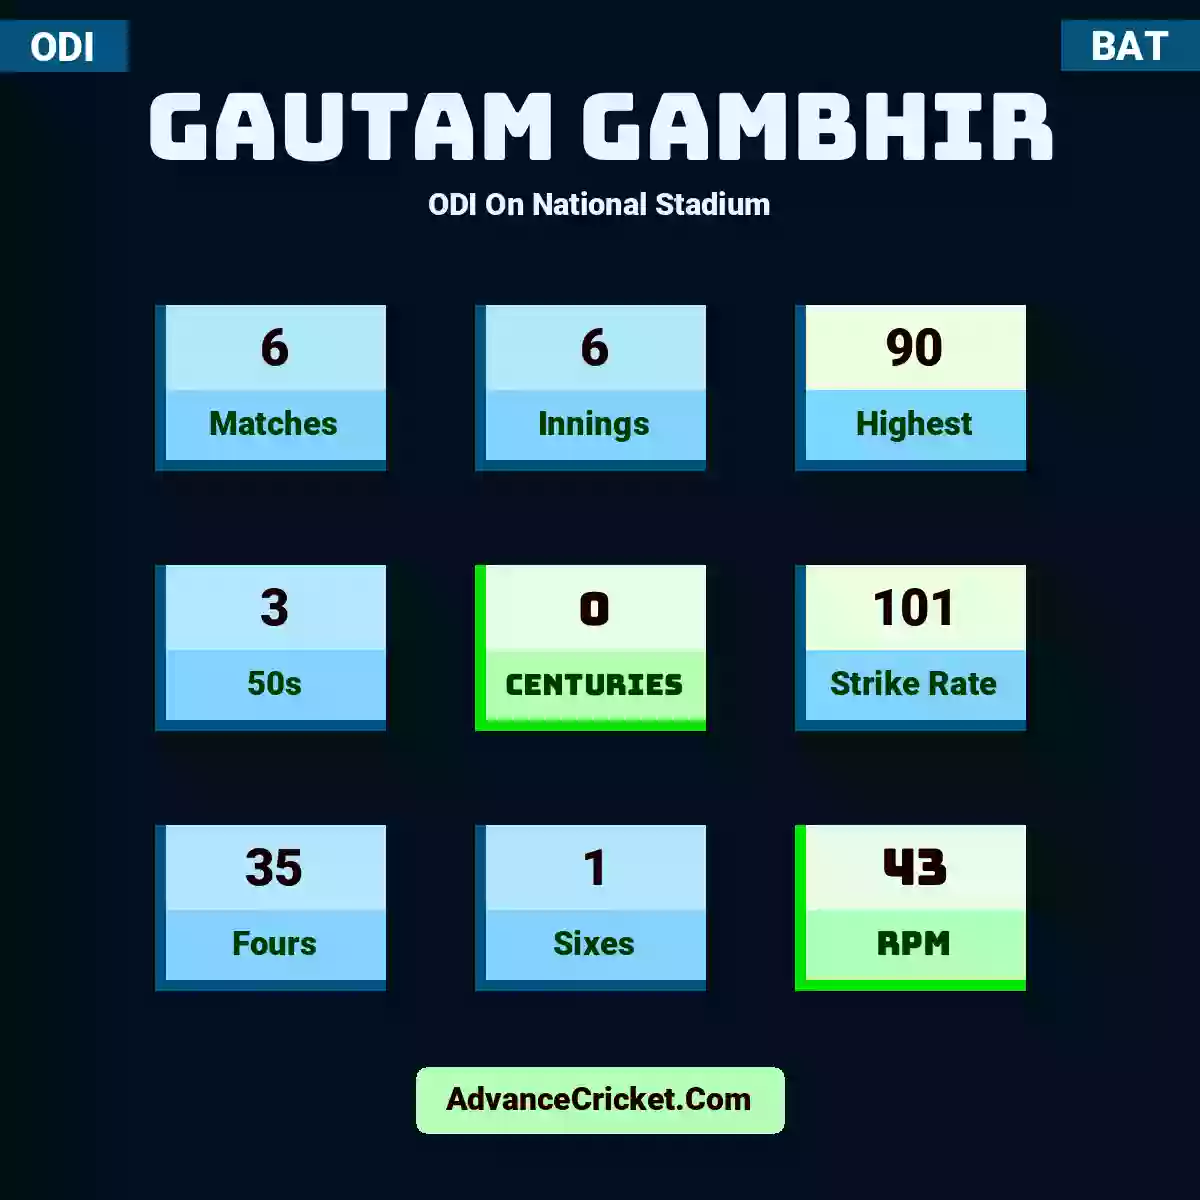 Gautam Gambhir ODI  On National Stadium, Gautam Gambhir played 6 matches, scored 90 runs as highest, 3 half-centuries, and 0 centuries, with a strike rate of 101. G.Gambhir hit 35 fours and 1 sixes, with an RPM of 43.